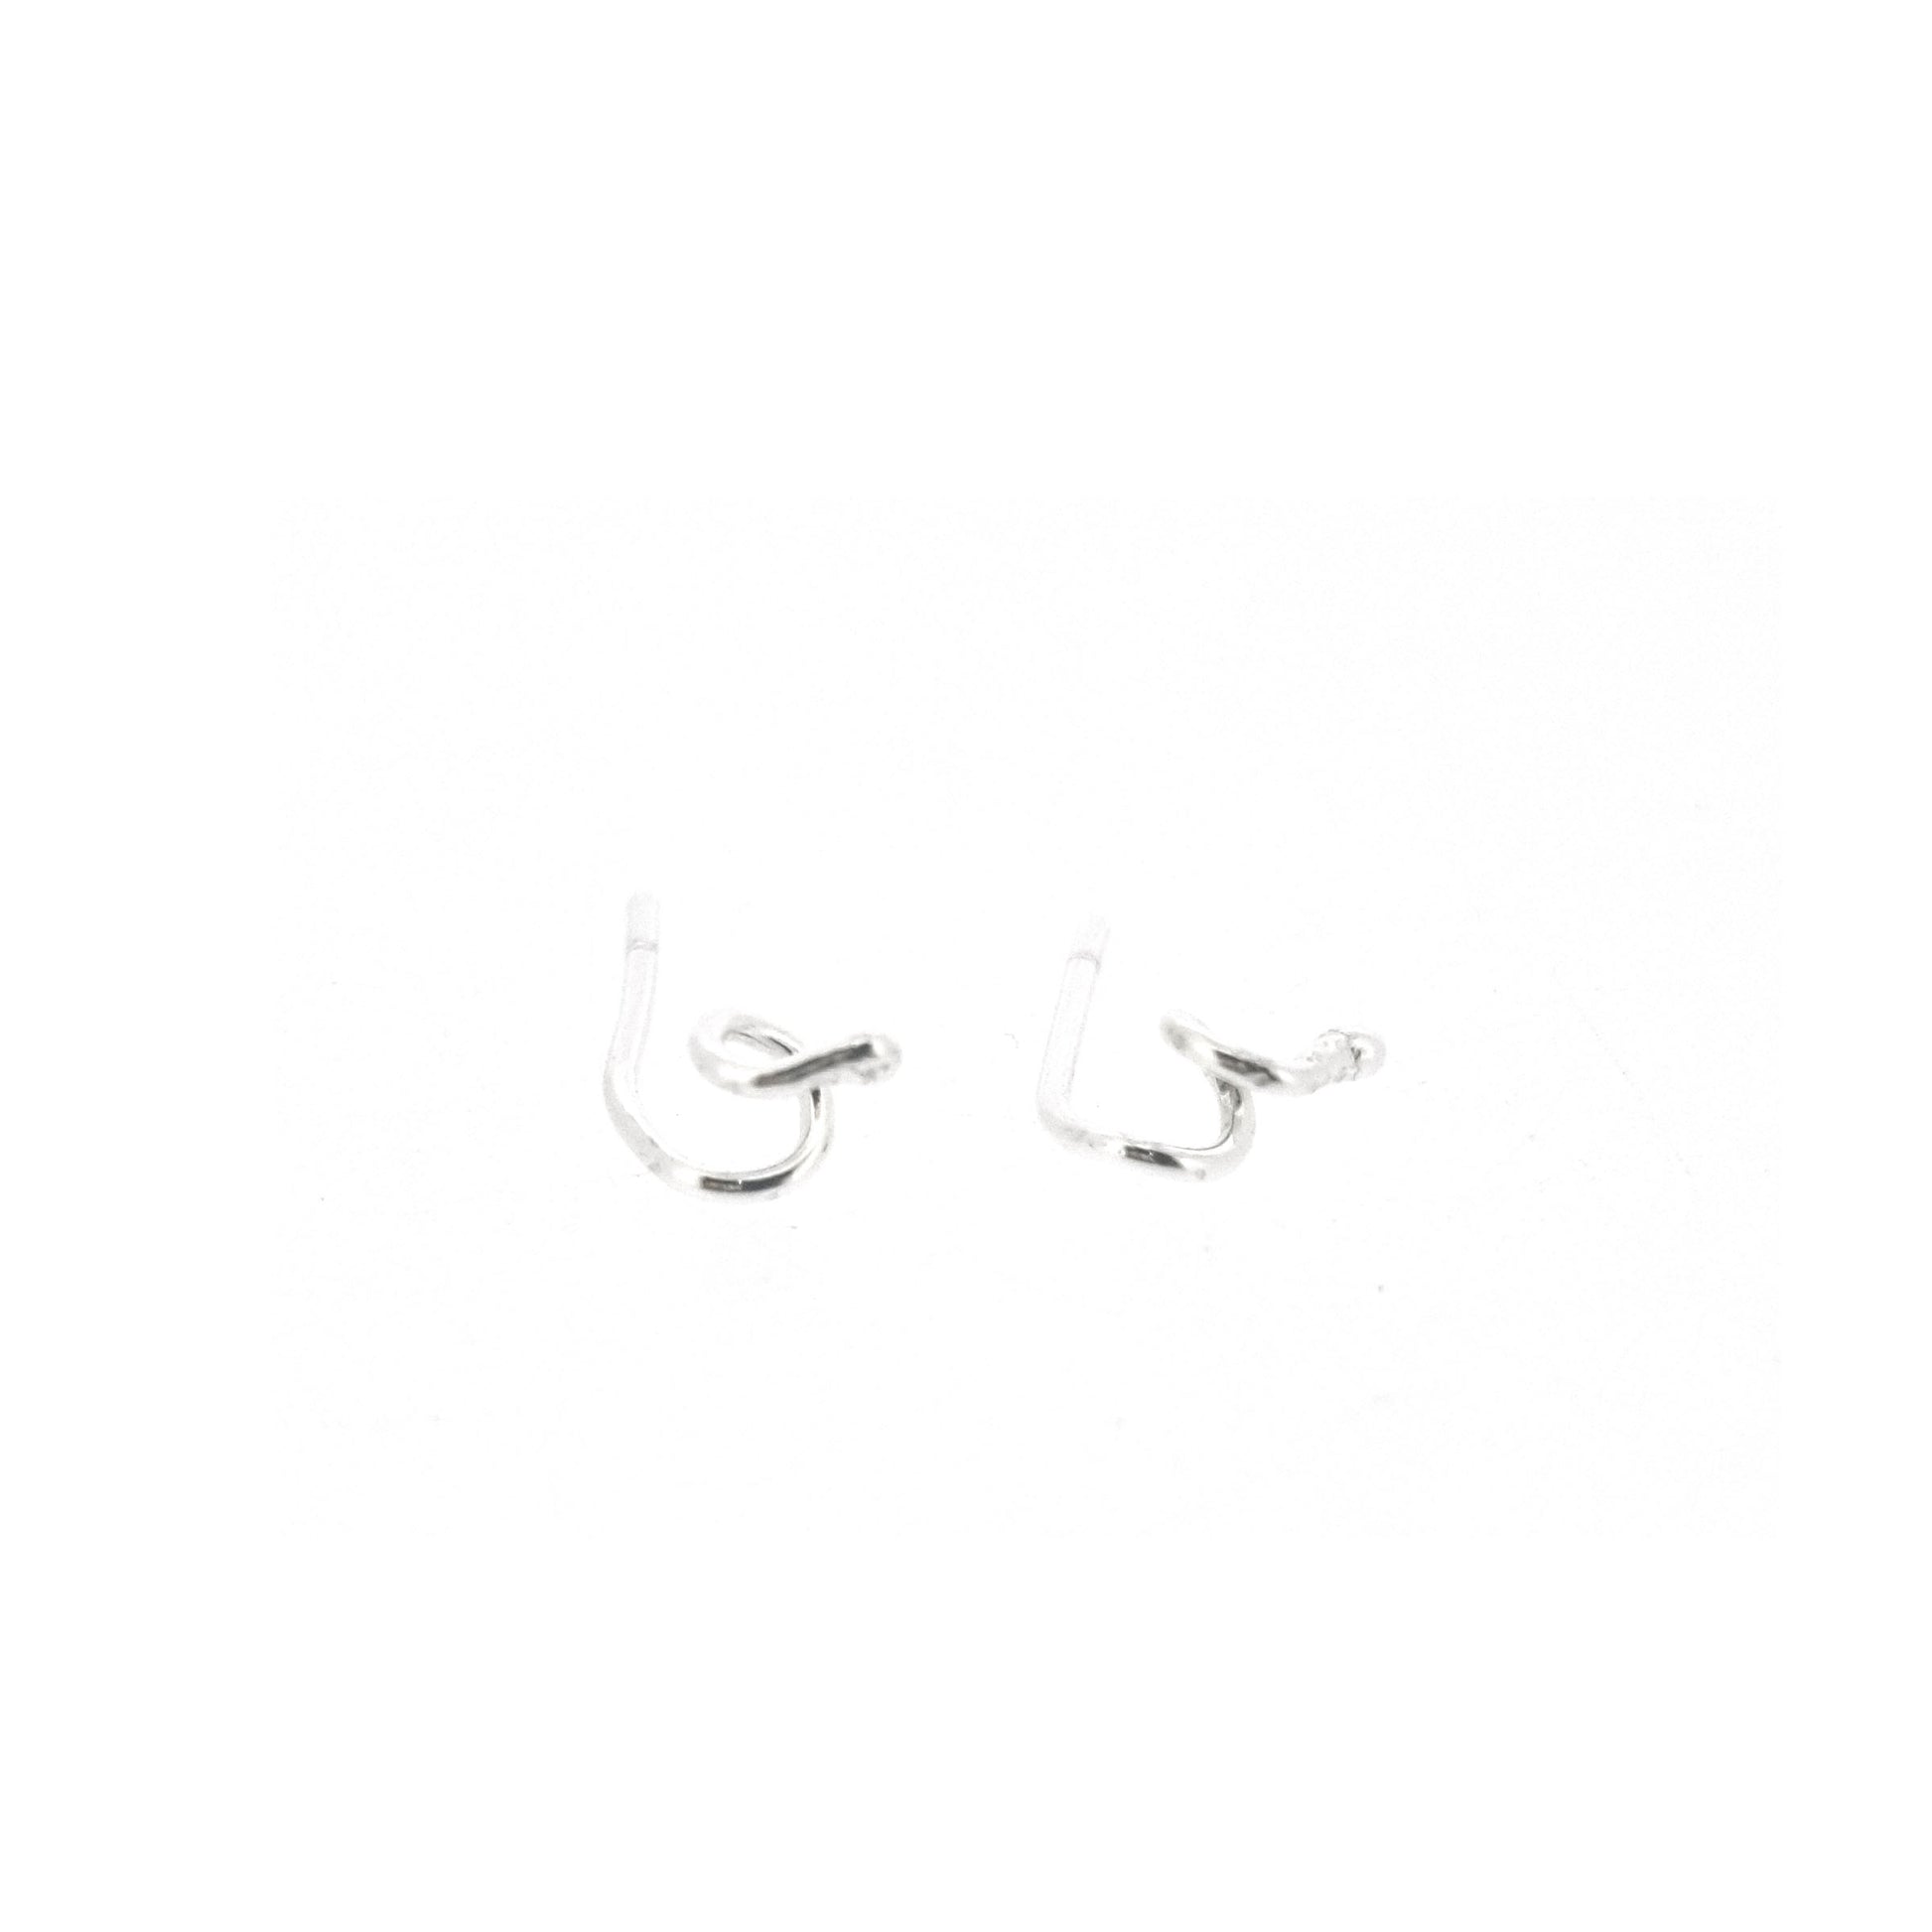 Sterling silver spiral stud earrings